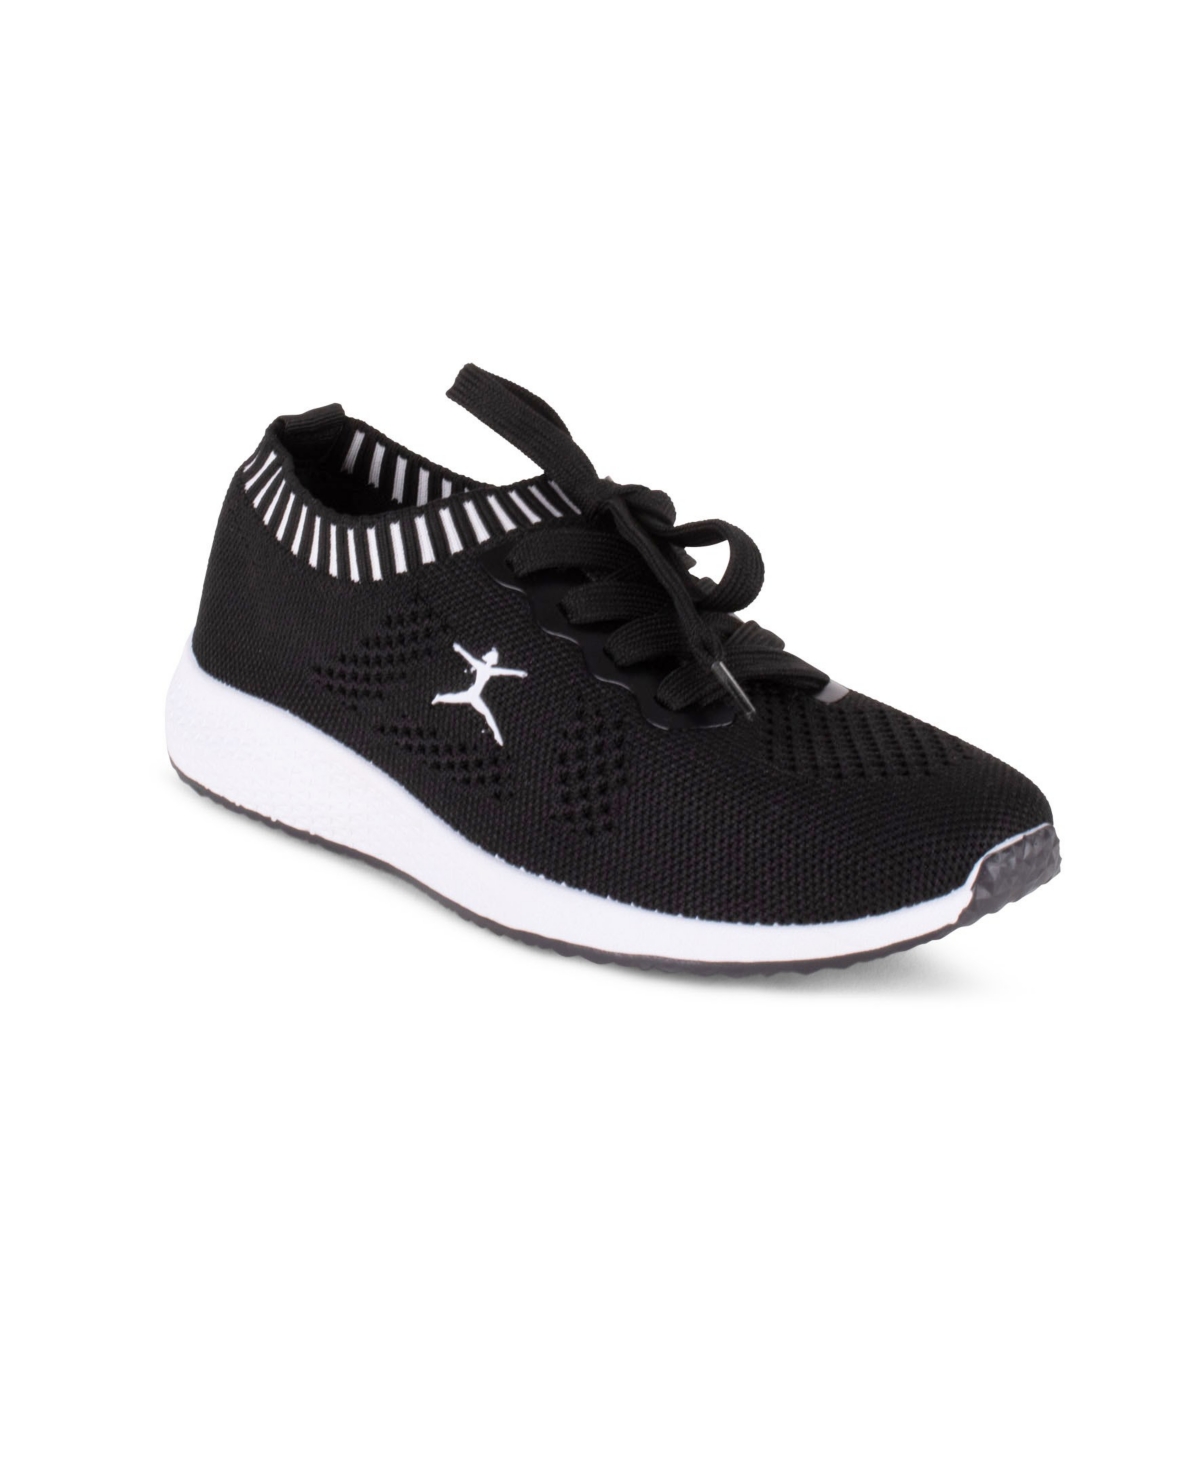 Women's Peace Two-Toned Sneaker - Black, White